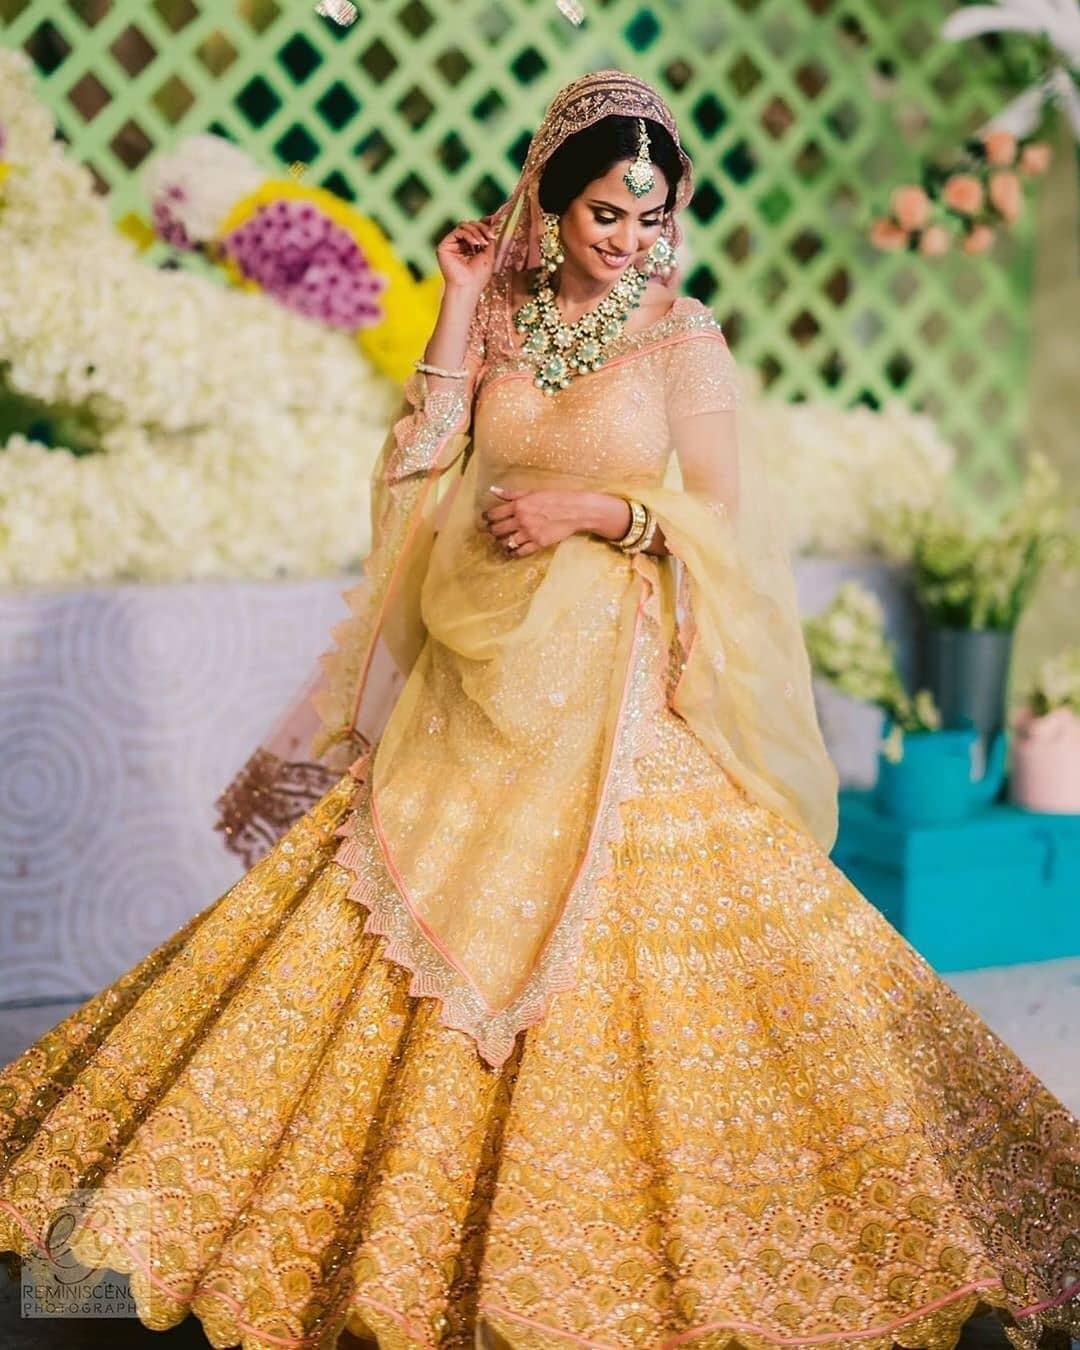 Naagin Actress Mouni Roy In A Yellow Lehenga And Wow Jewellery - Boldsky.com